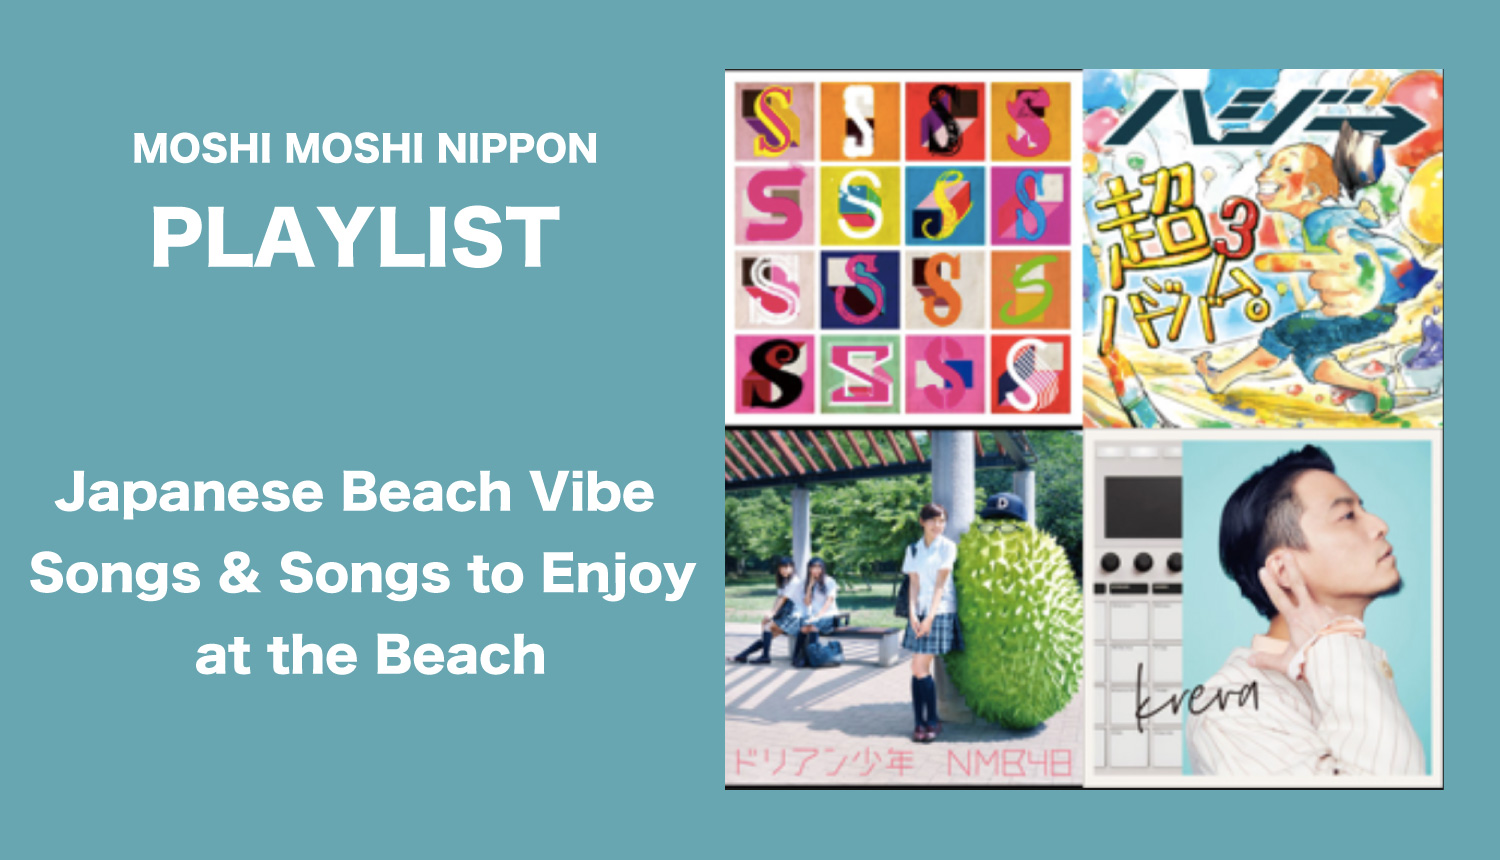 Joe Hisaishi Announces New Album 'Songs Of Hope